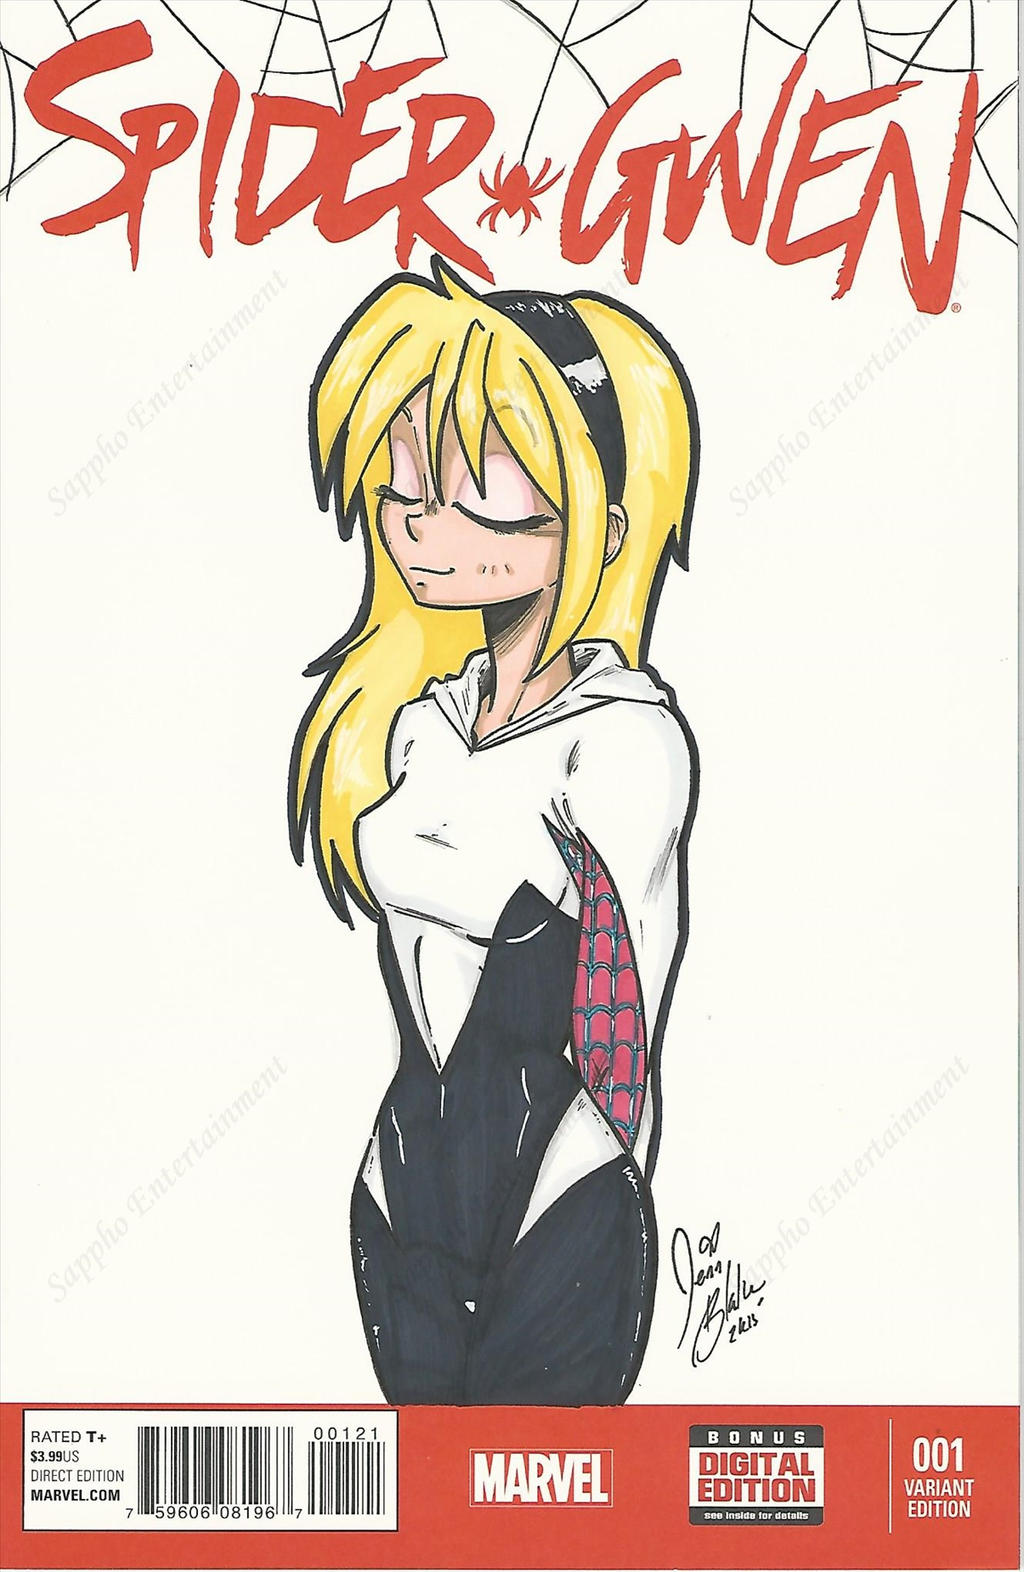 Spider-Gwen Sketch Cover By Ponygoddess On Deviantart-4456